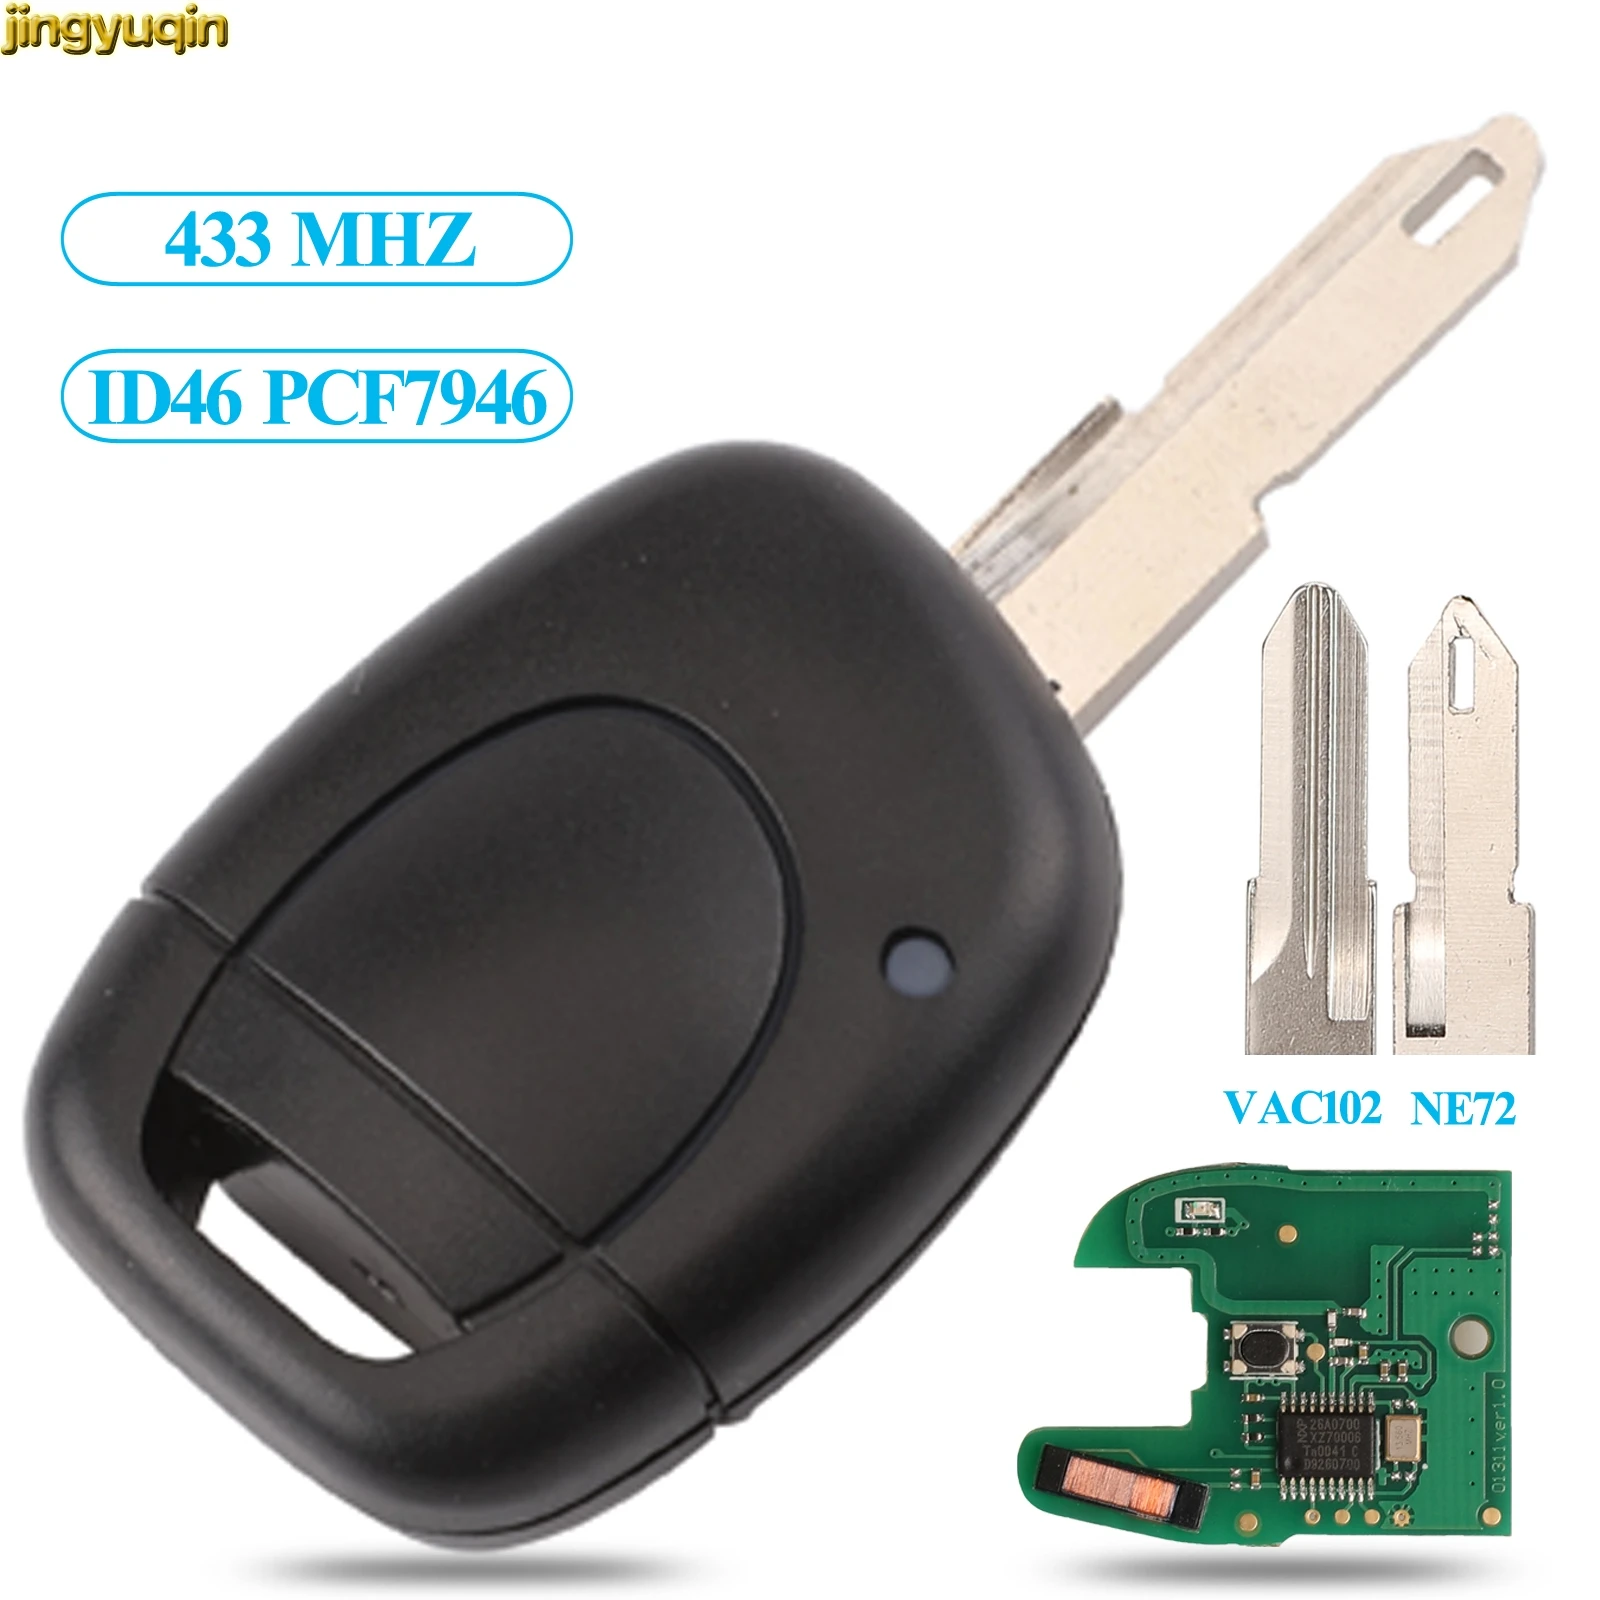 

Jingyuqin Remote Car Key Control 433MHZ ID46 PCF7946 Chip For Renault Clio Kangoo Master Twingo VAC102/NE72 Blade